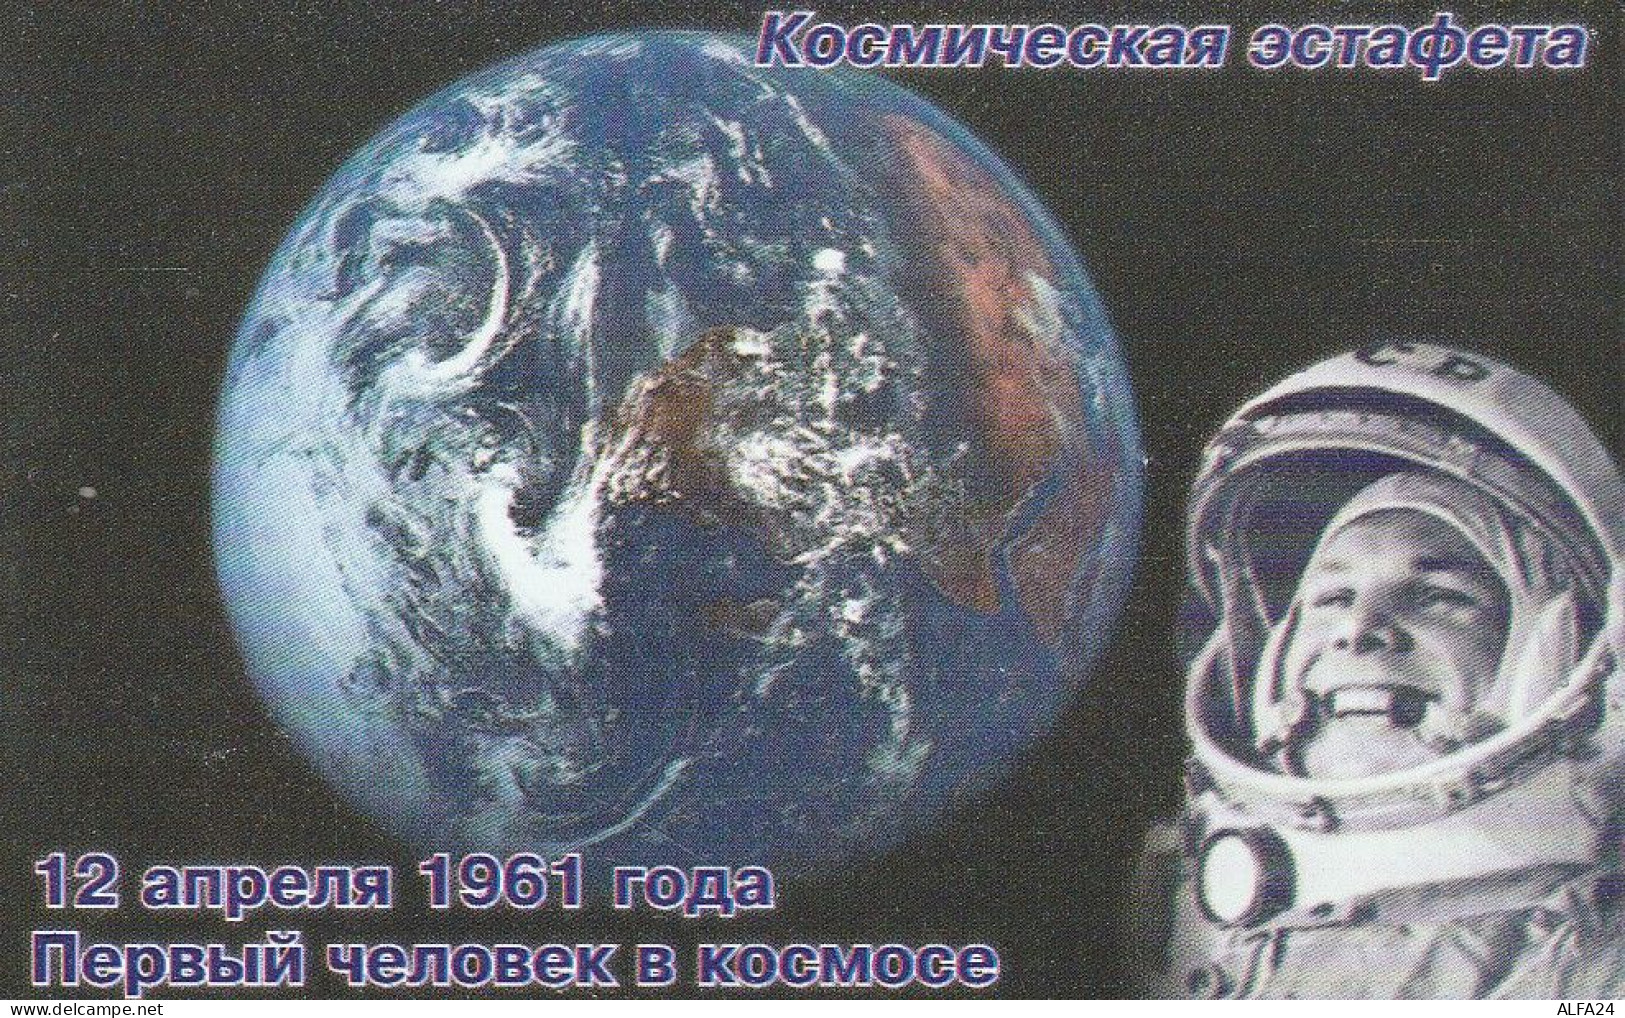 PHONE CARD RUSSIA Bashinformsvyaz - Ufa (E9.3.1 - Russland